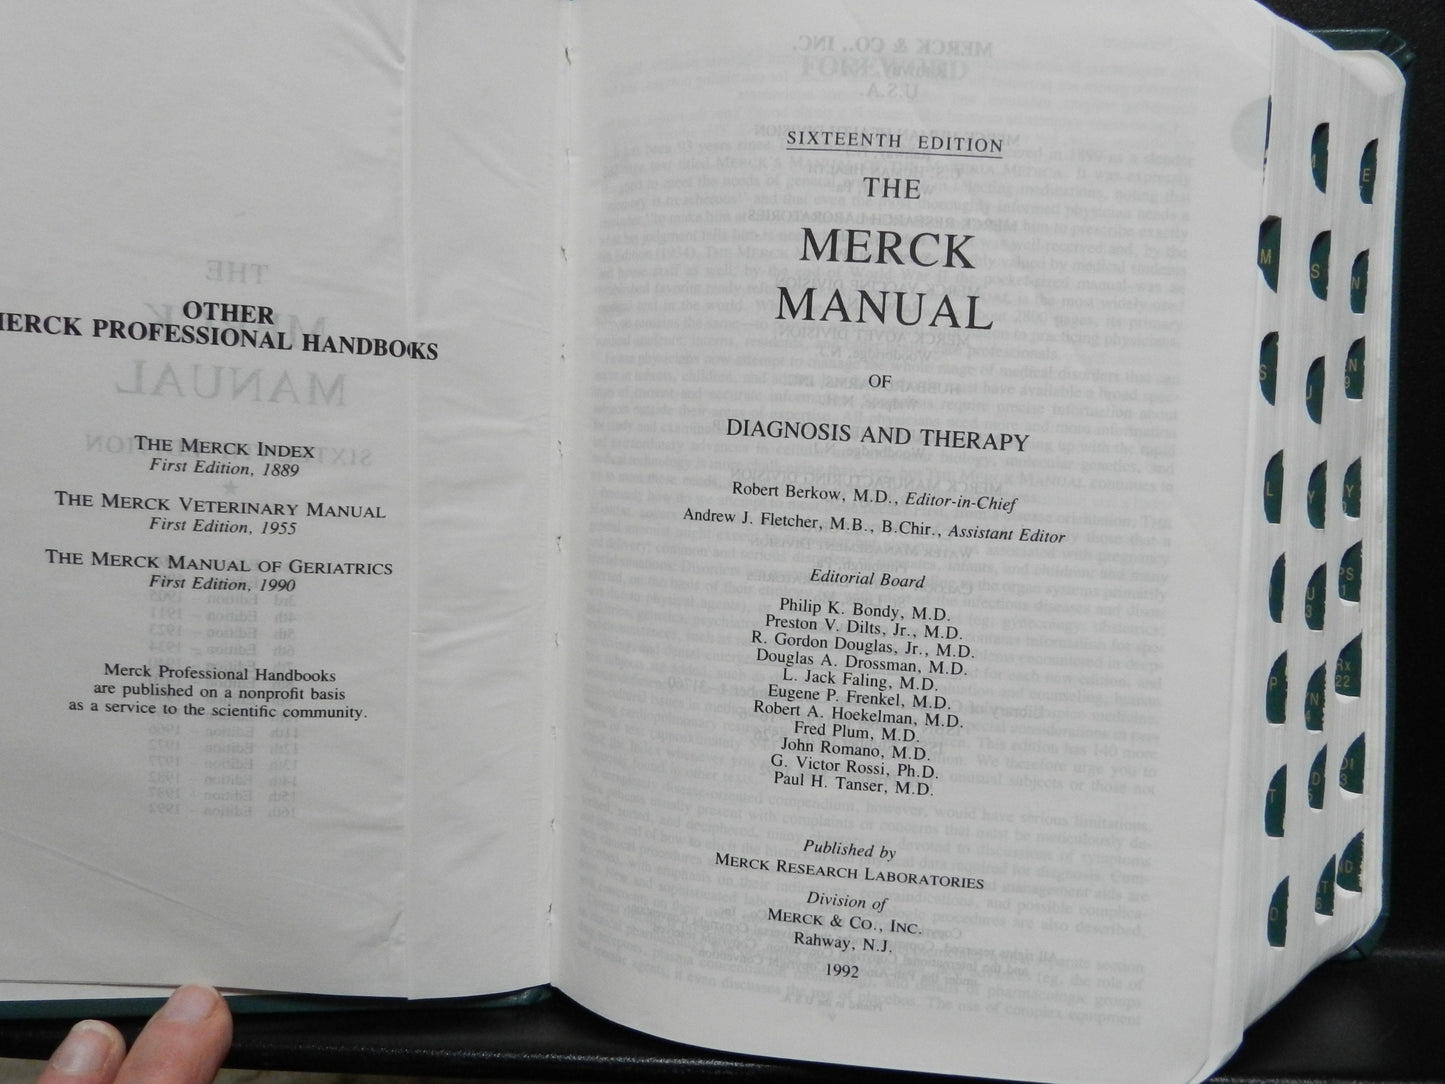 Vintage "The Merck Manual" Sixteenth Edition 1992